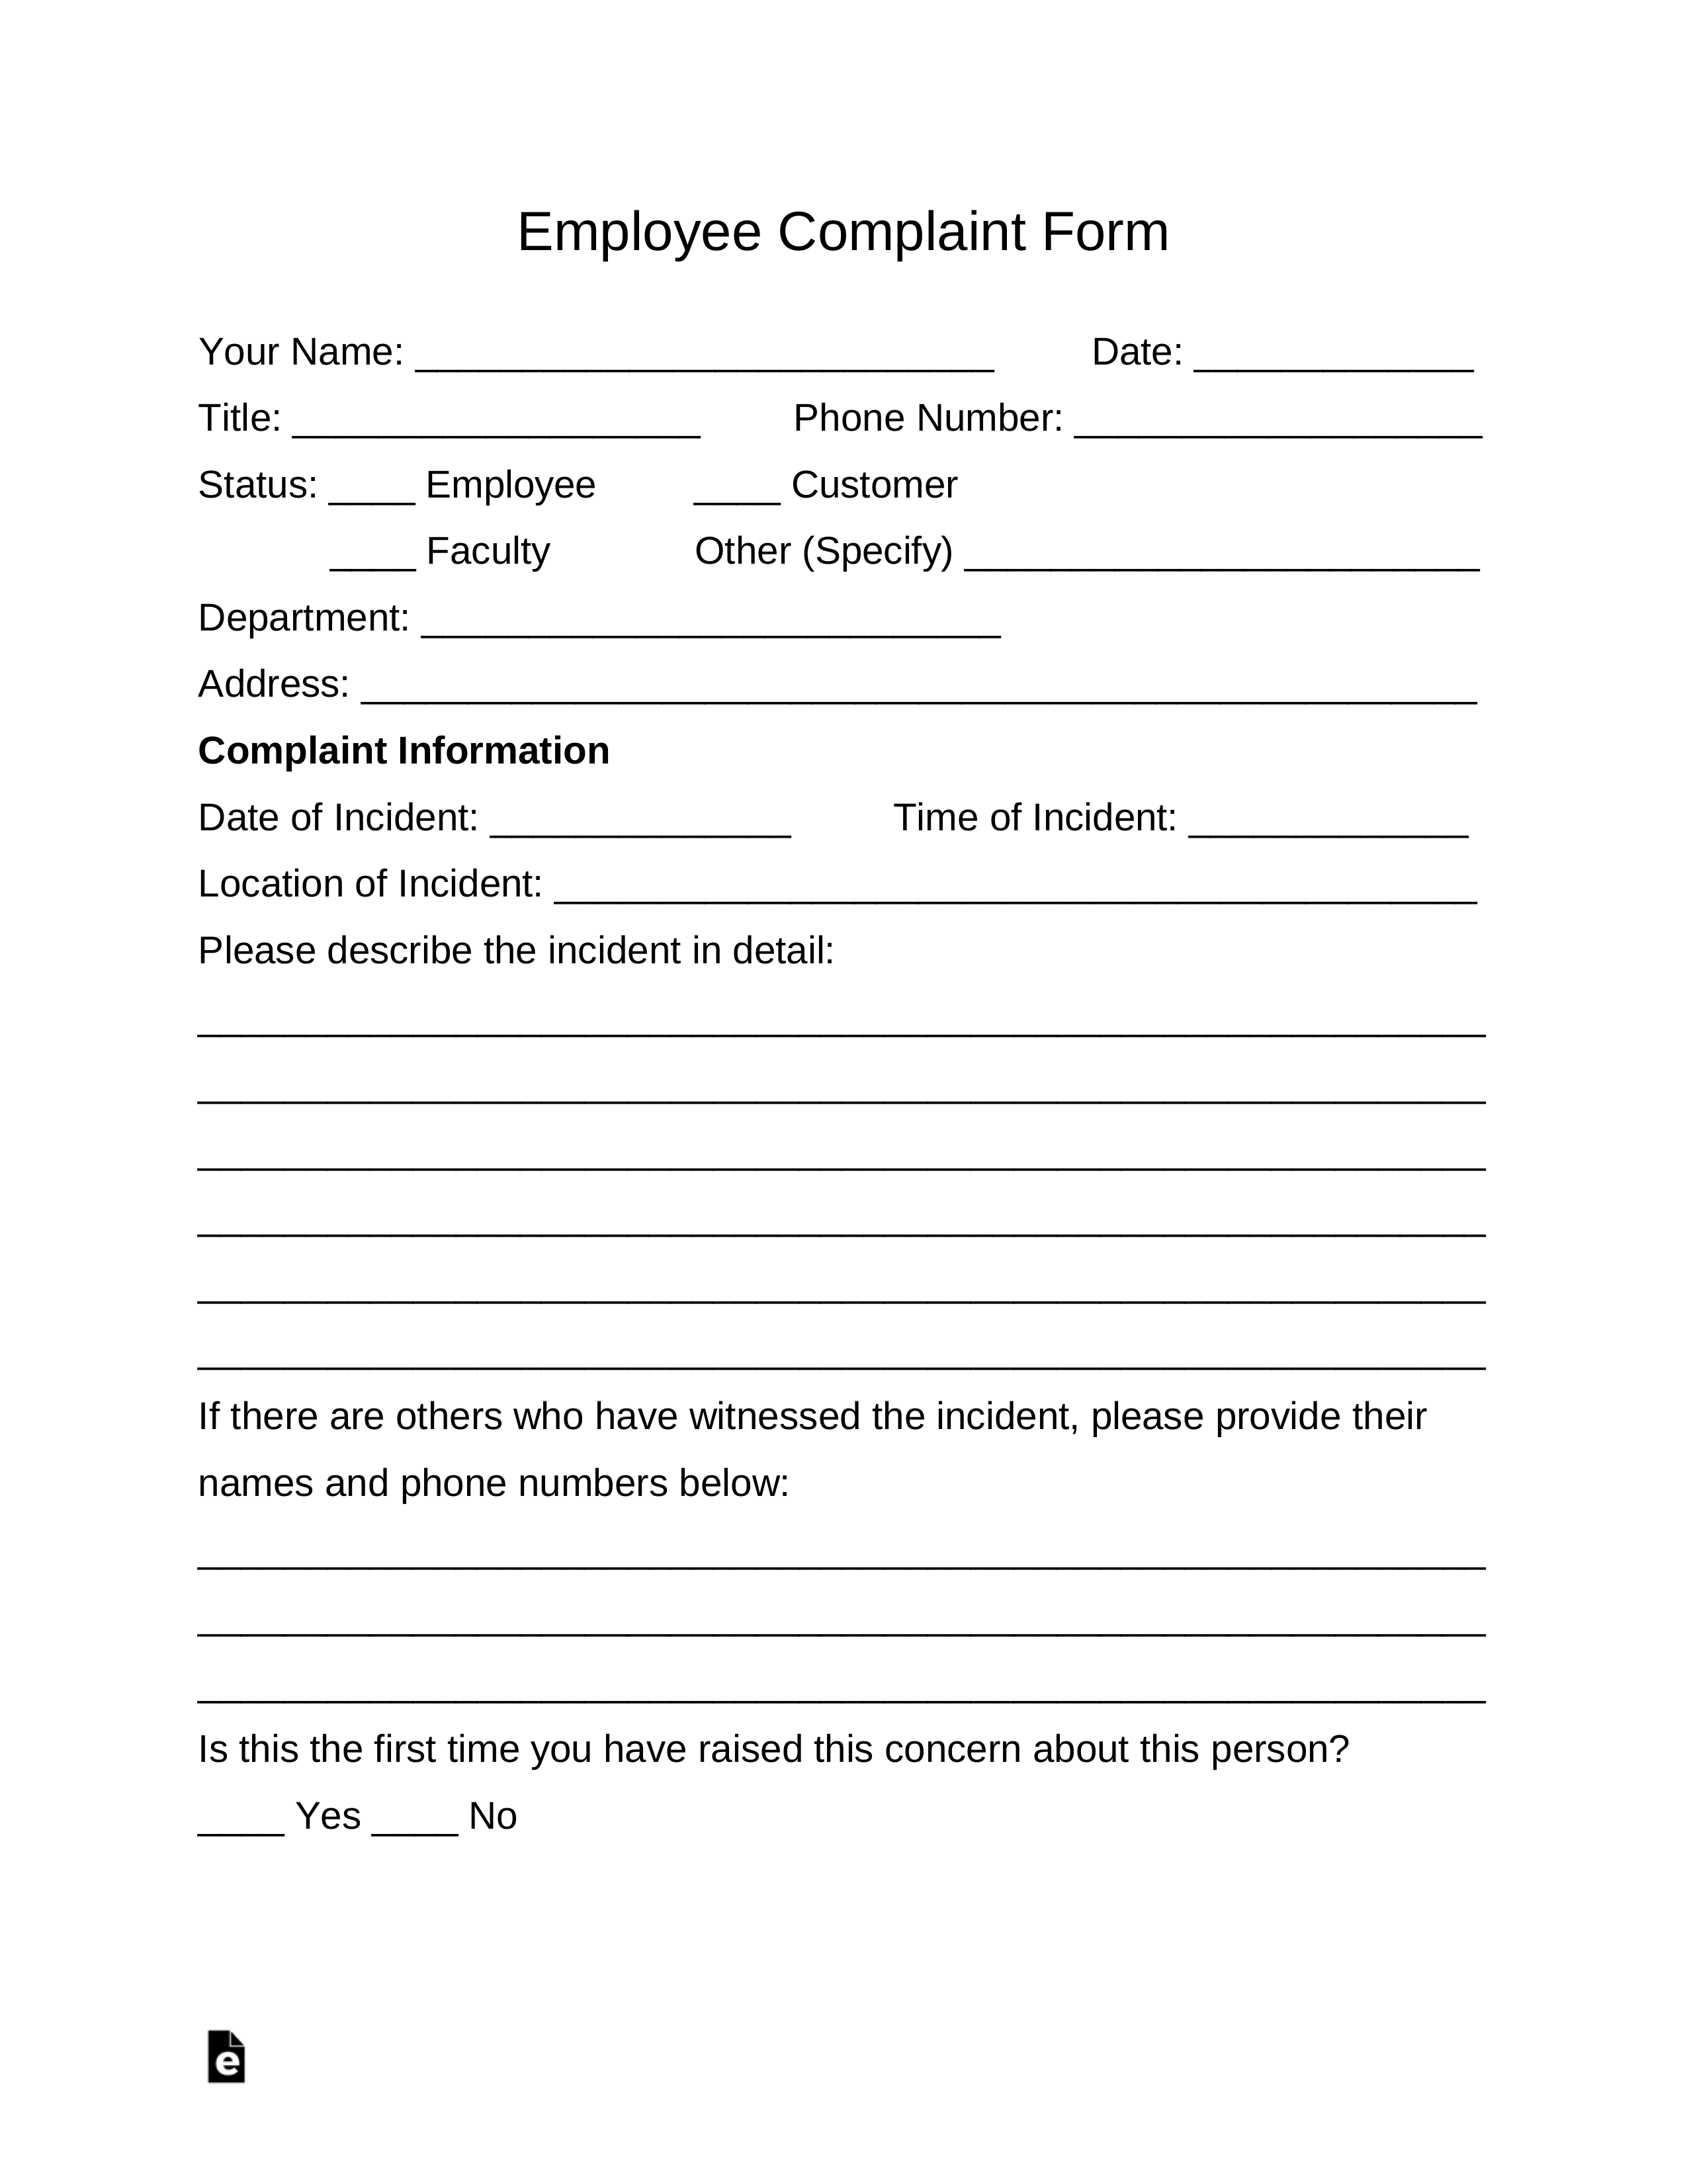 customer complaints form